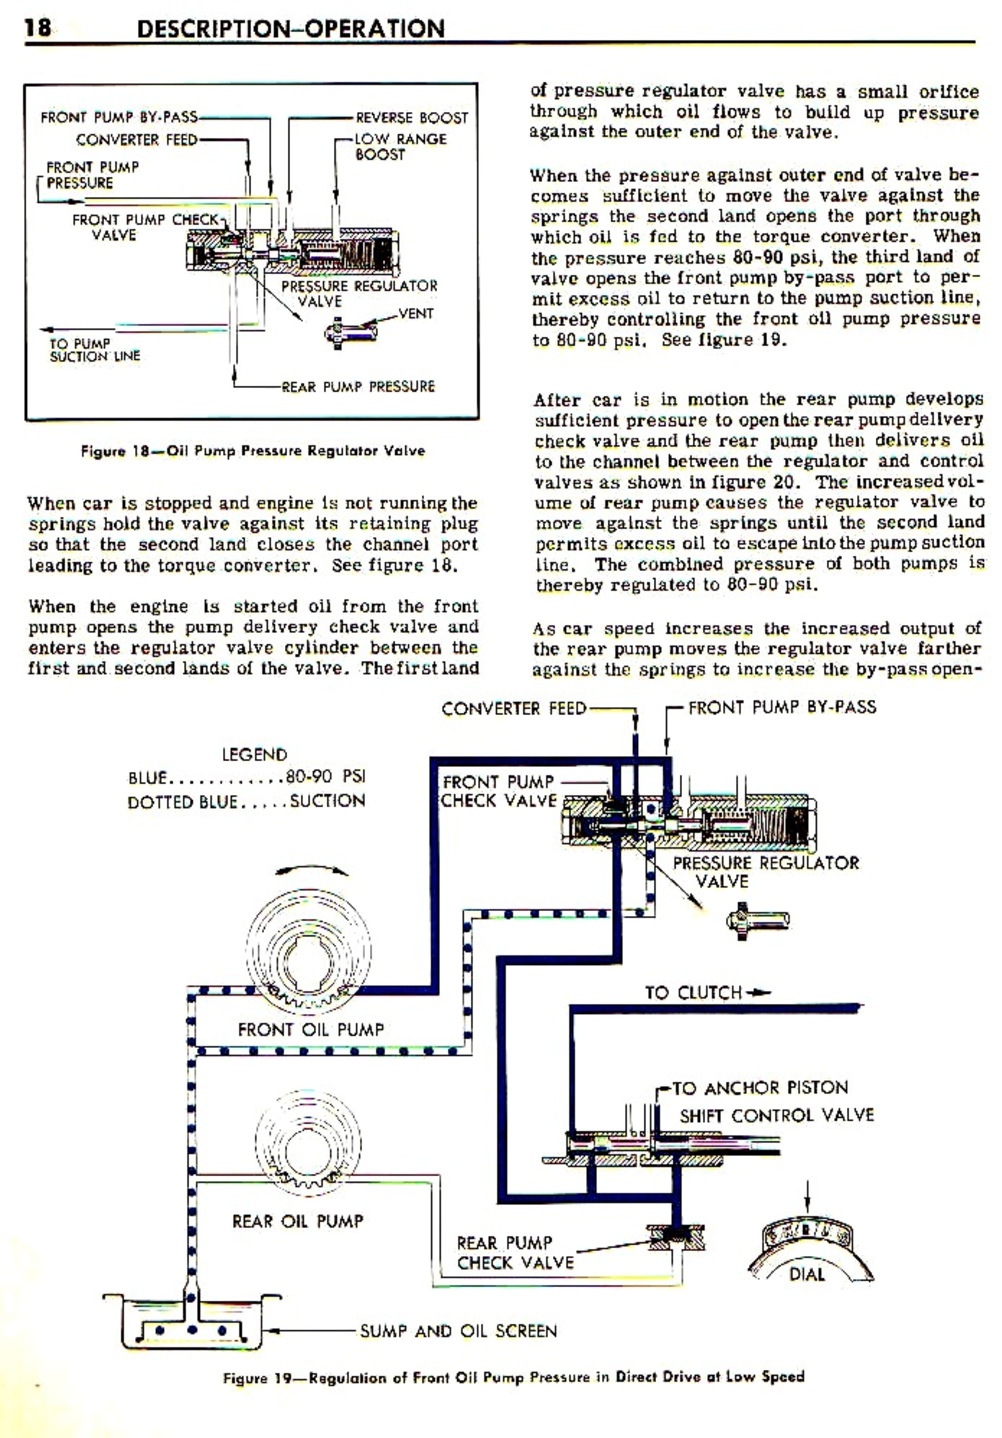 n_02 1948 Buick Transmission - Descr & Oper-012-012.jpg